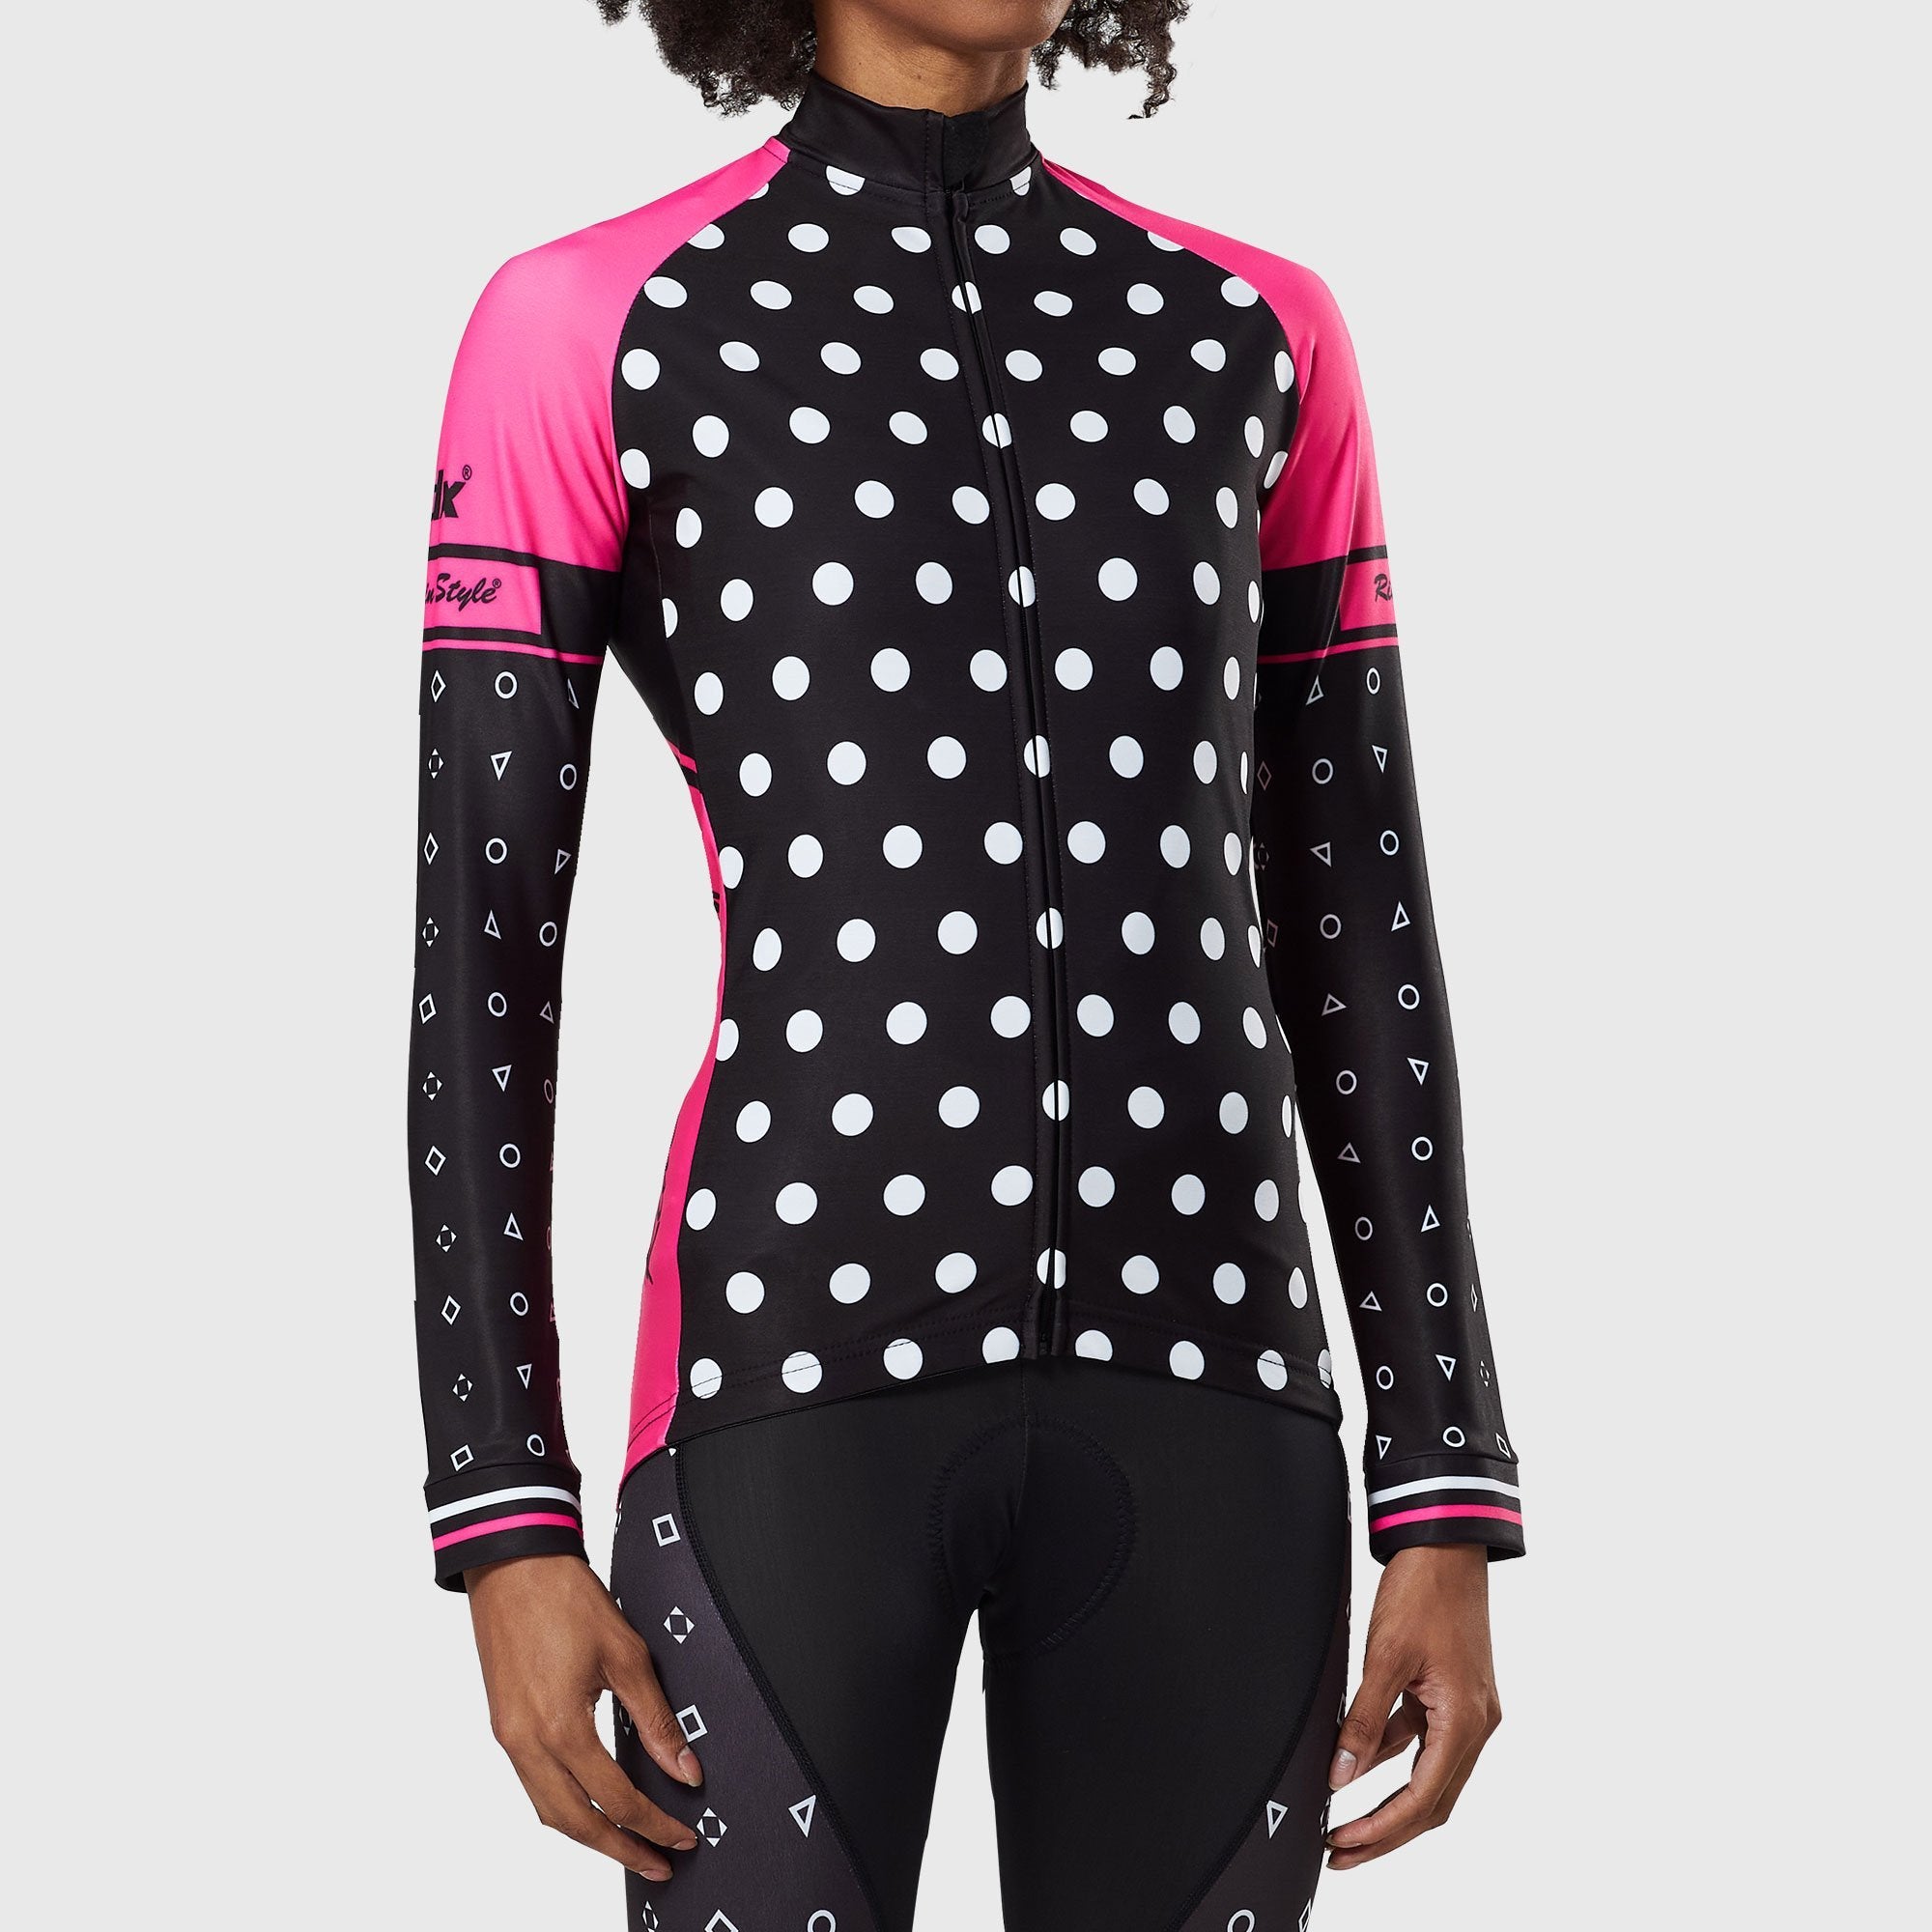 FDX Best Women's Black & Pink Long Sleeve Cycling Jersey for Winter Roubaix Thermal Fleece Shirt Road Bike Wear Top Full Zipper, Lightweight  Pockets & Hi viz Reflectors - Polka